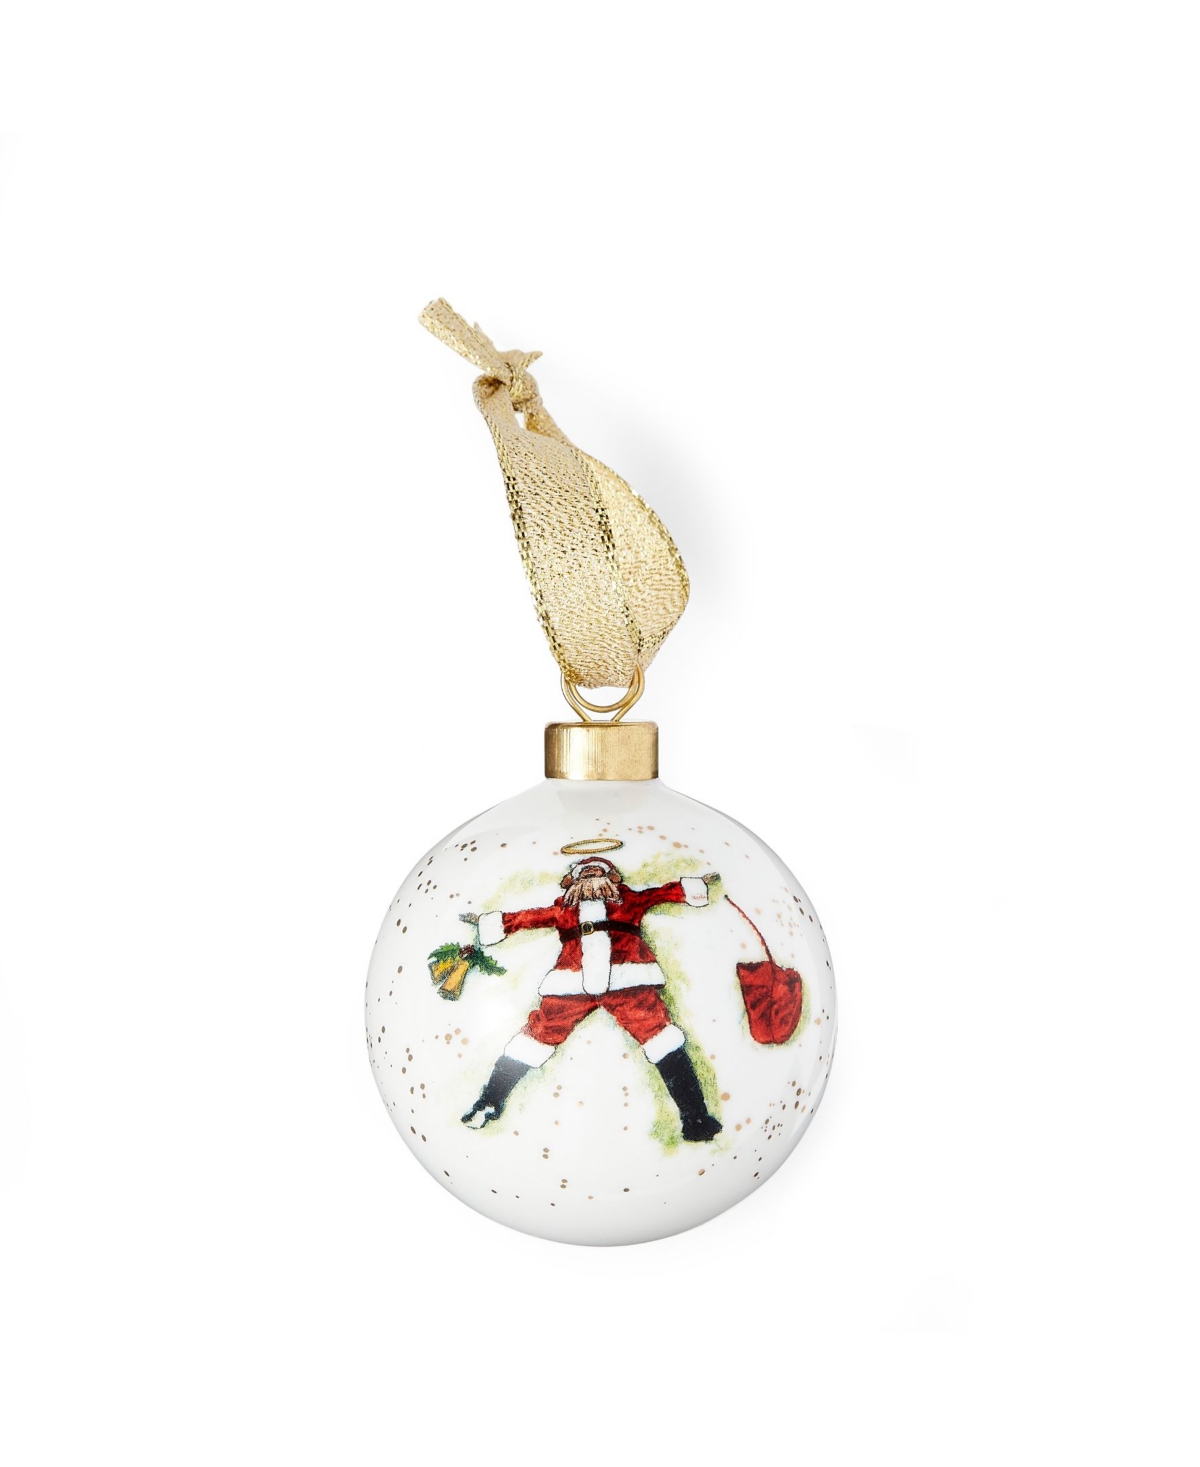 Kit Kemp For Spode Christmas Doodles Best In Snow Bauble Ornament In White